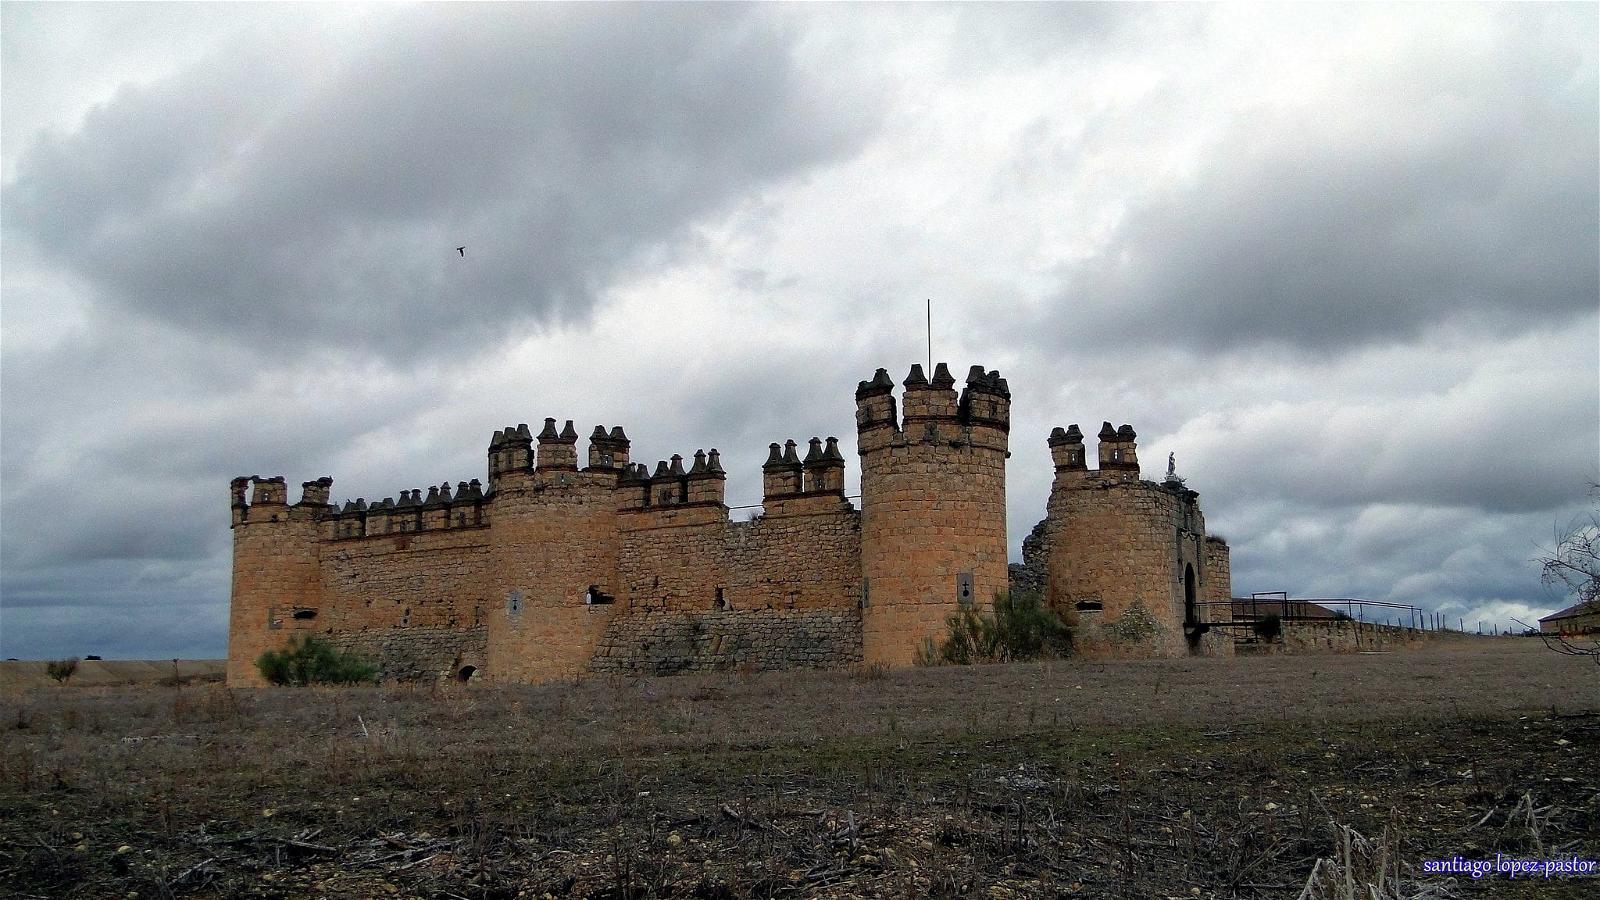 Imagen de Castillo de San Silvestre. españa castle spain medieval toledo espagne middleages castillo chateaux castilla castillalamancha provinciadetoledo